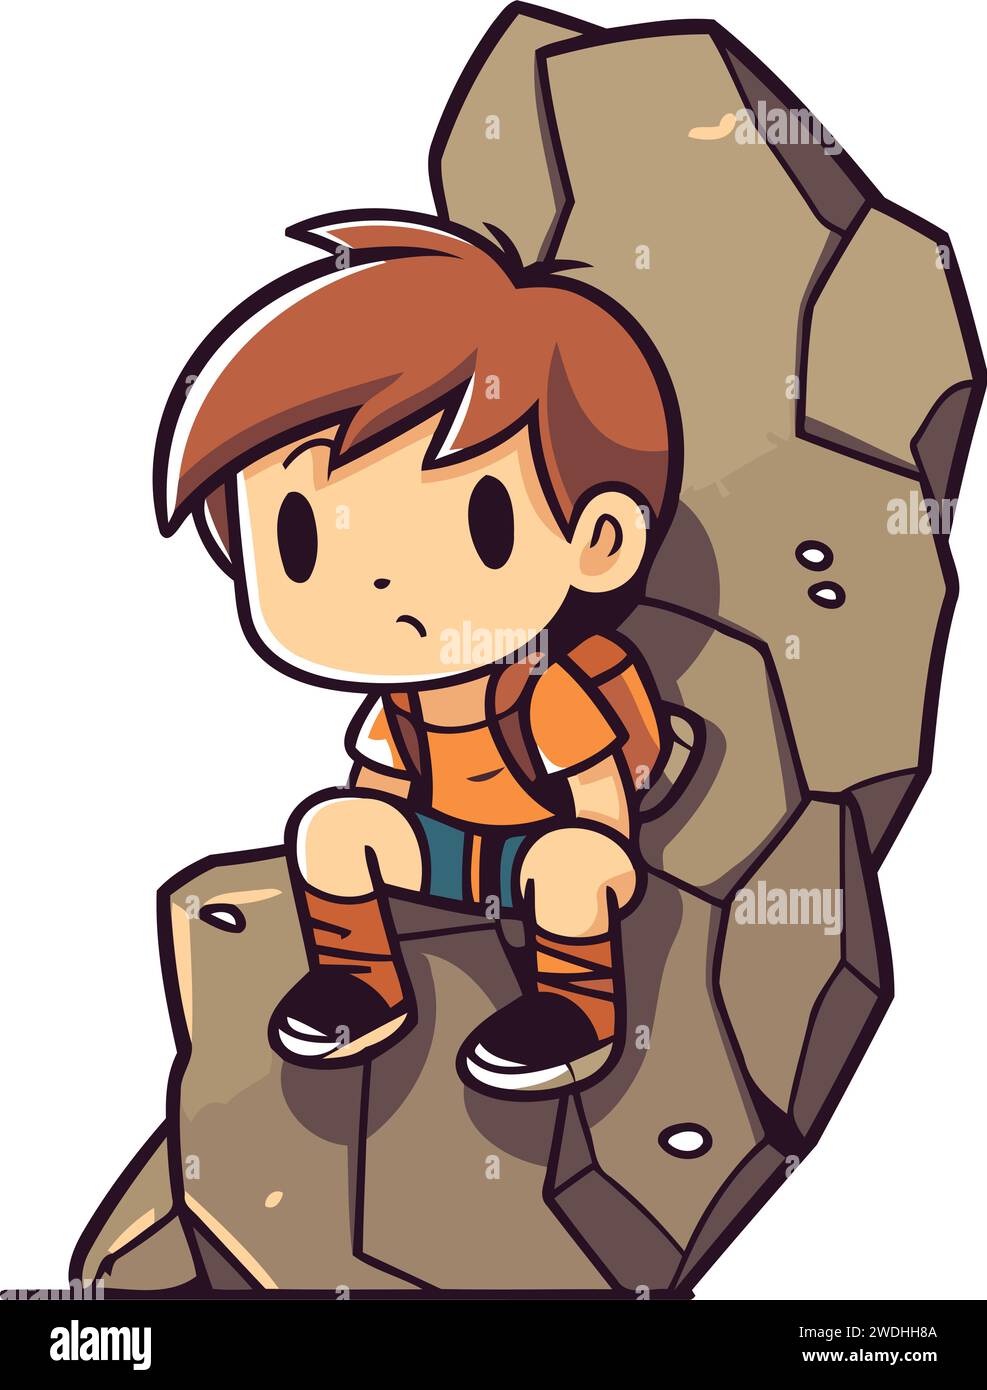 Little boy sitting on a rock. Vector illustration in cartoon style. Stock Vector